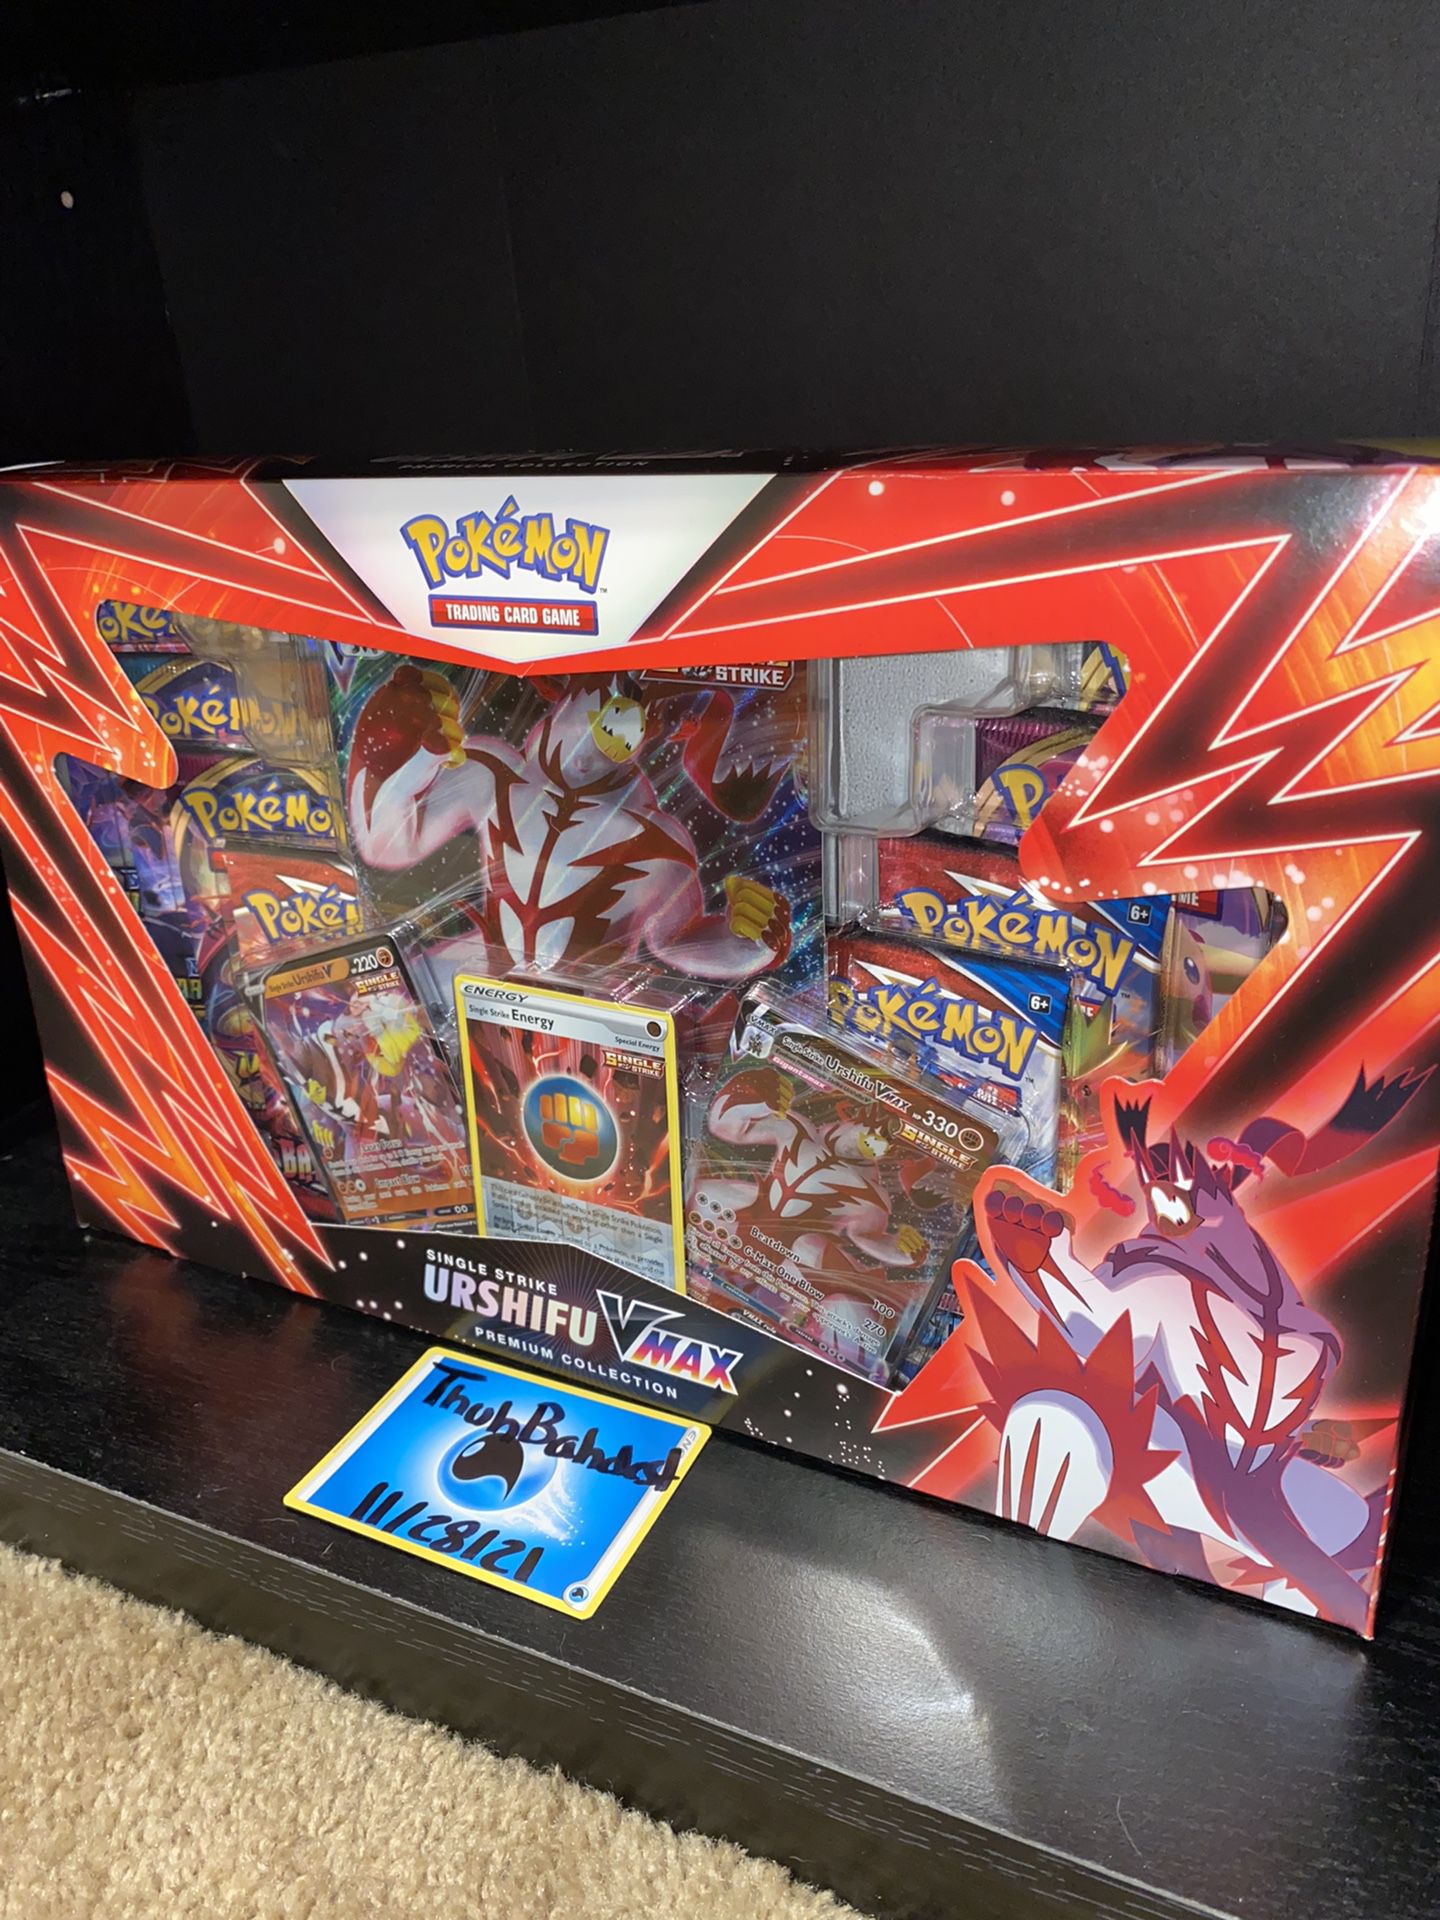 Pokémon URSHIFU Premium Box (8 Packs) 1 Box